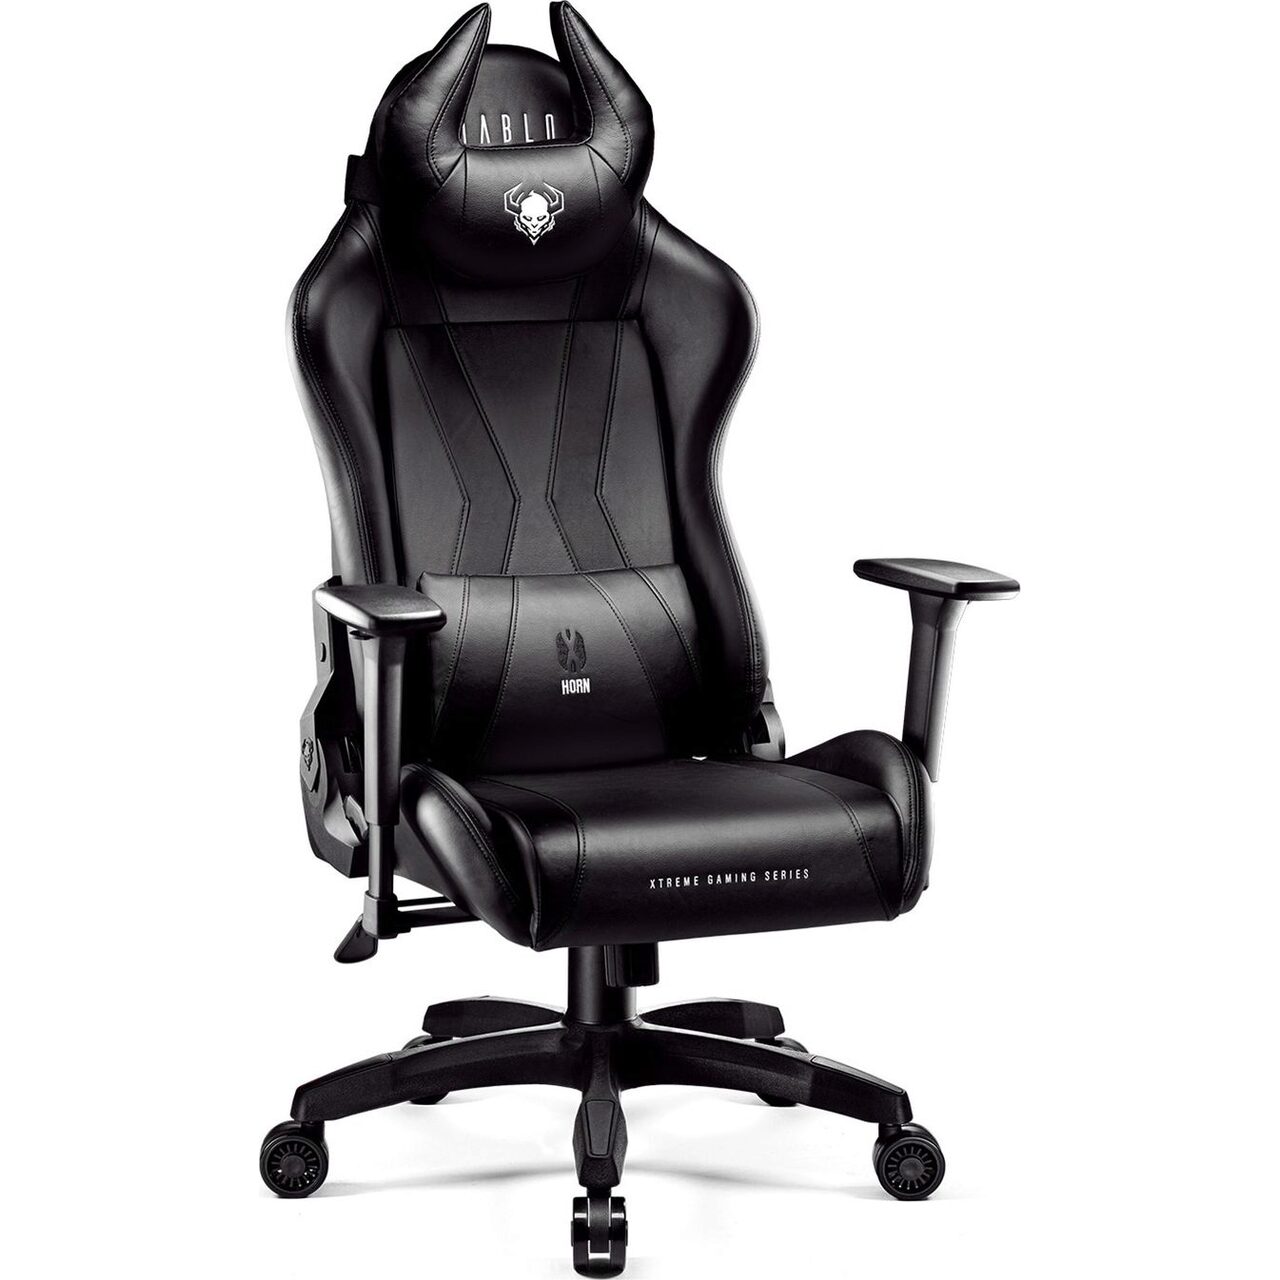 Scaun gaming Diablo Chairs X-HORNSCZCZA, piele ecologica, 150 kg, Negru